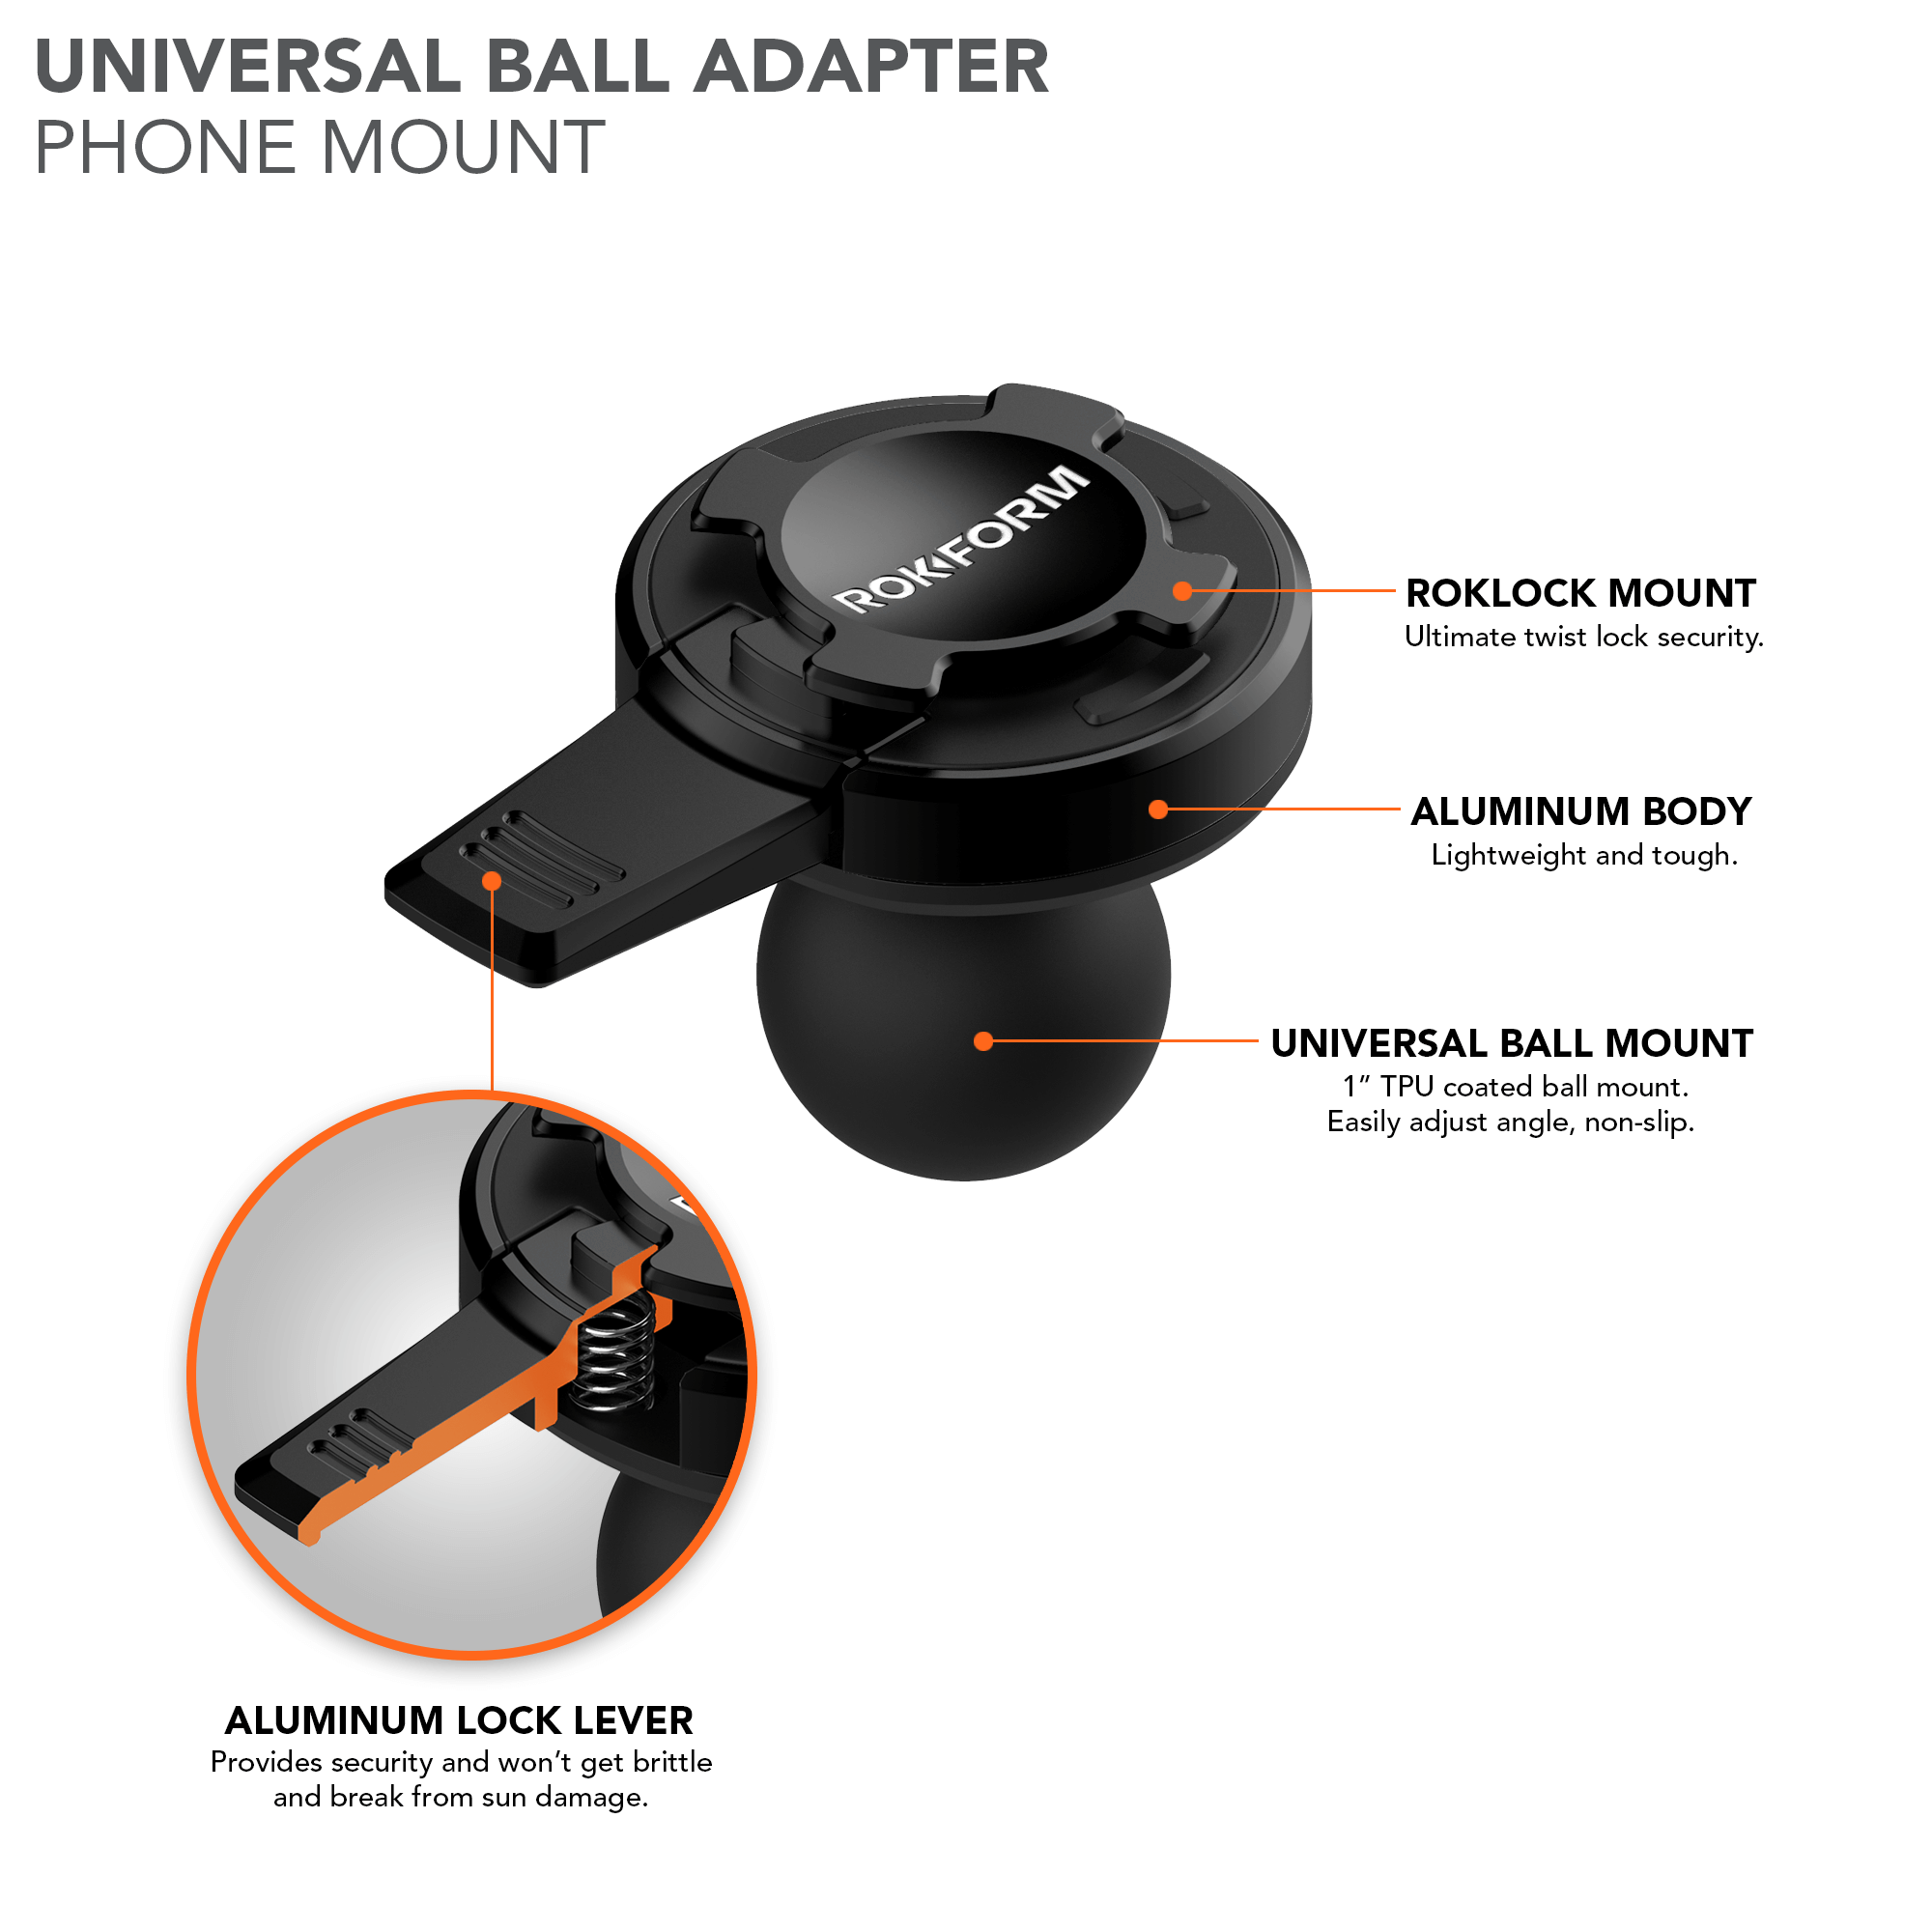 Universal Ball Adapter Phone Mount